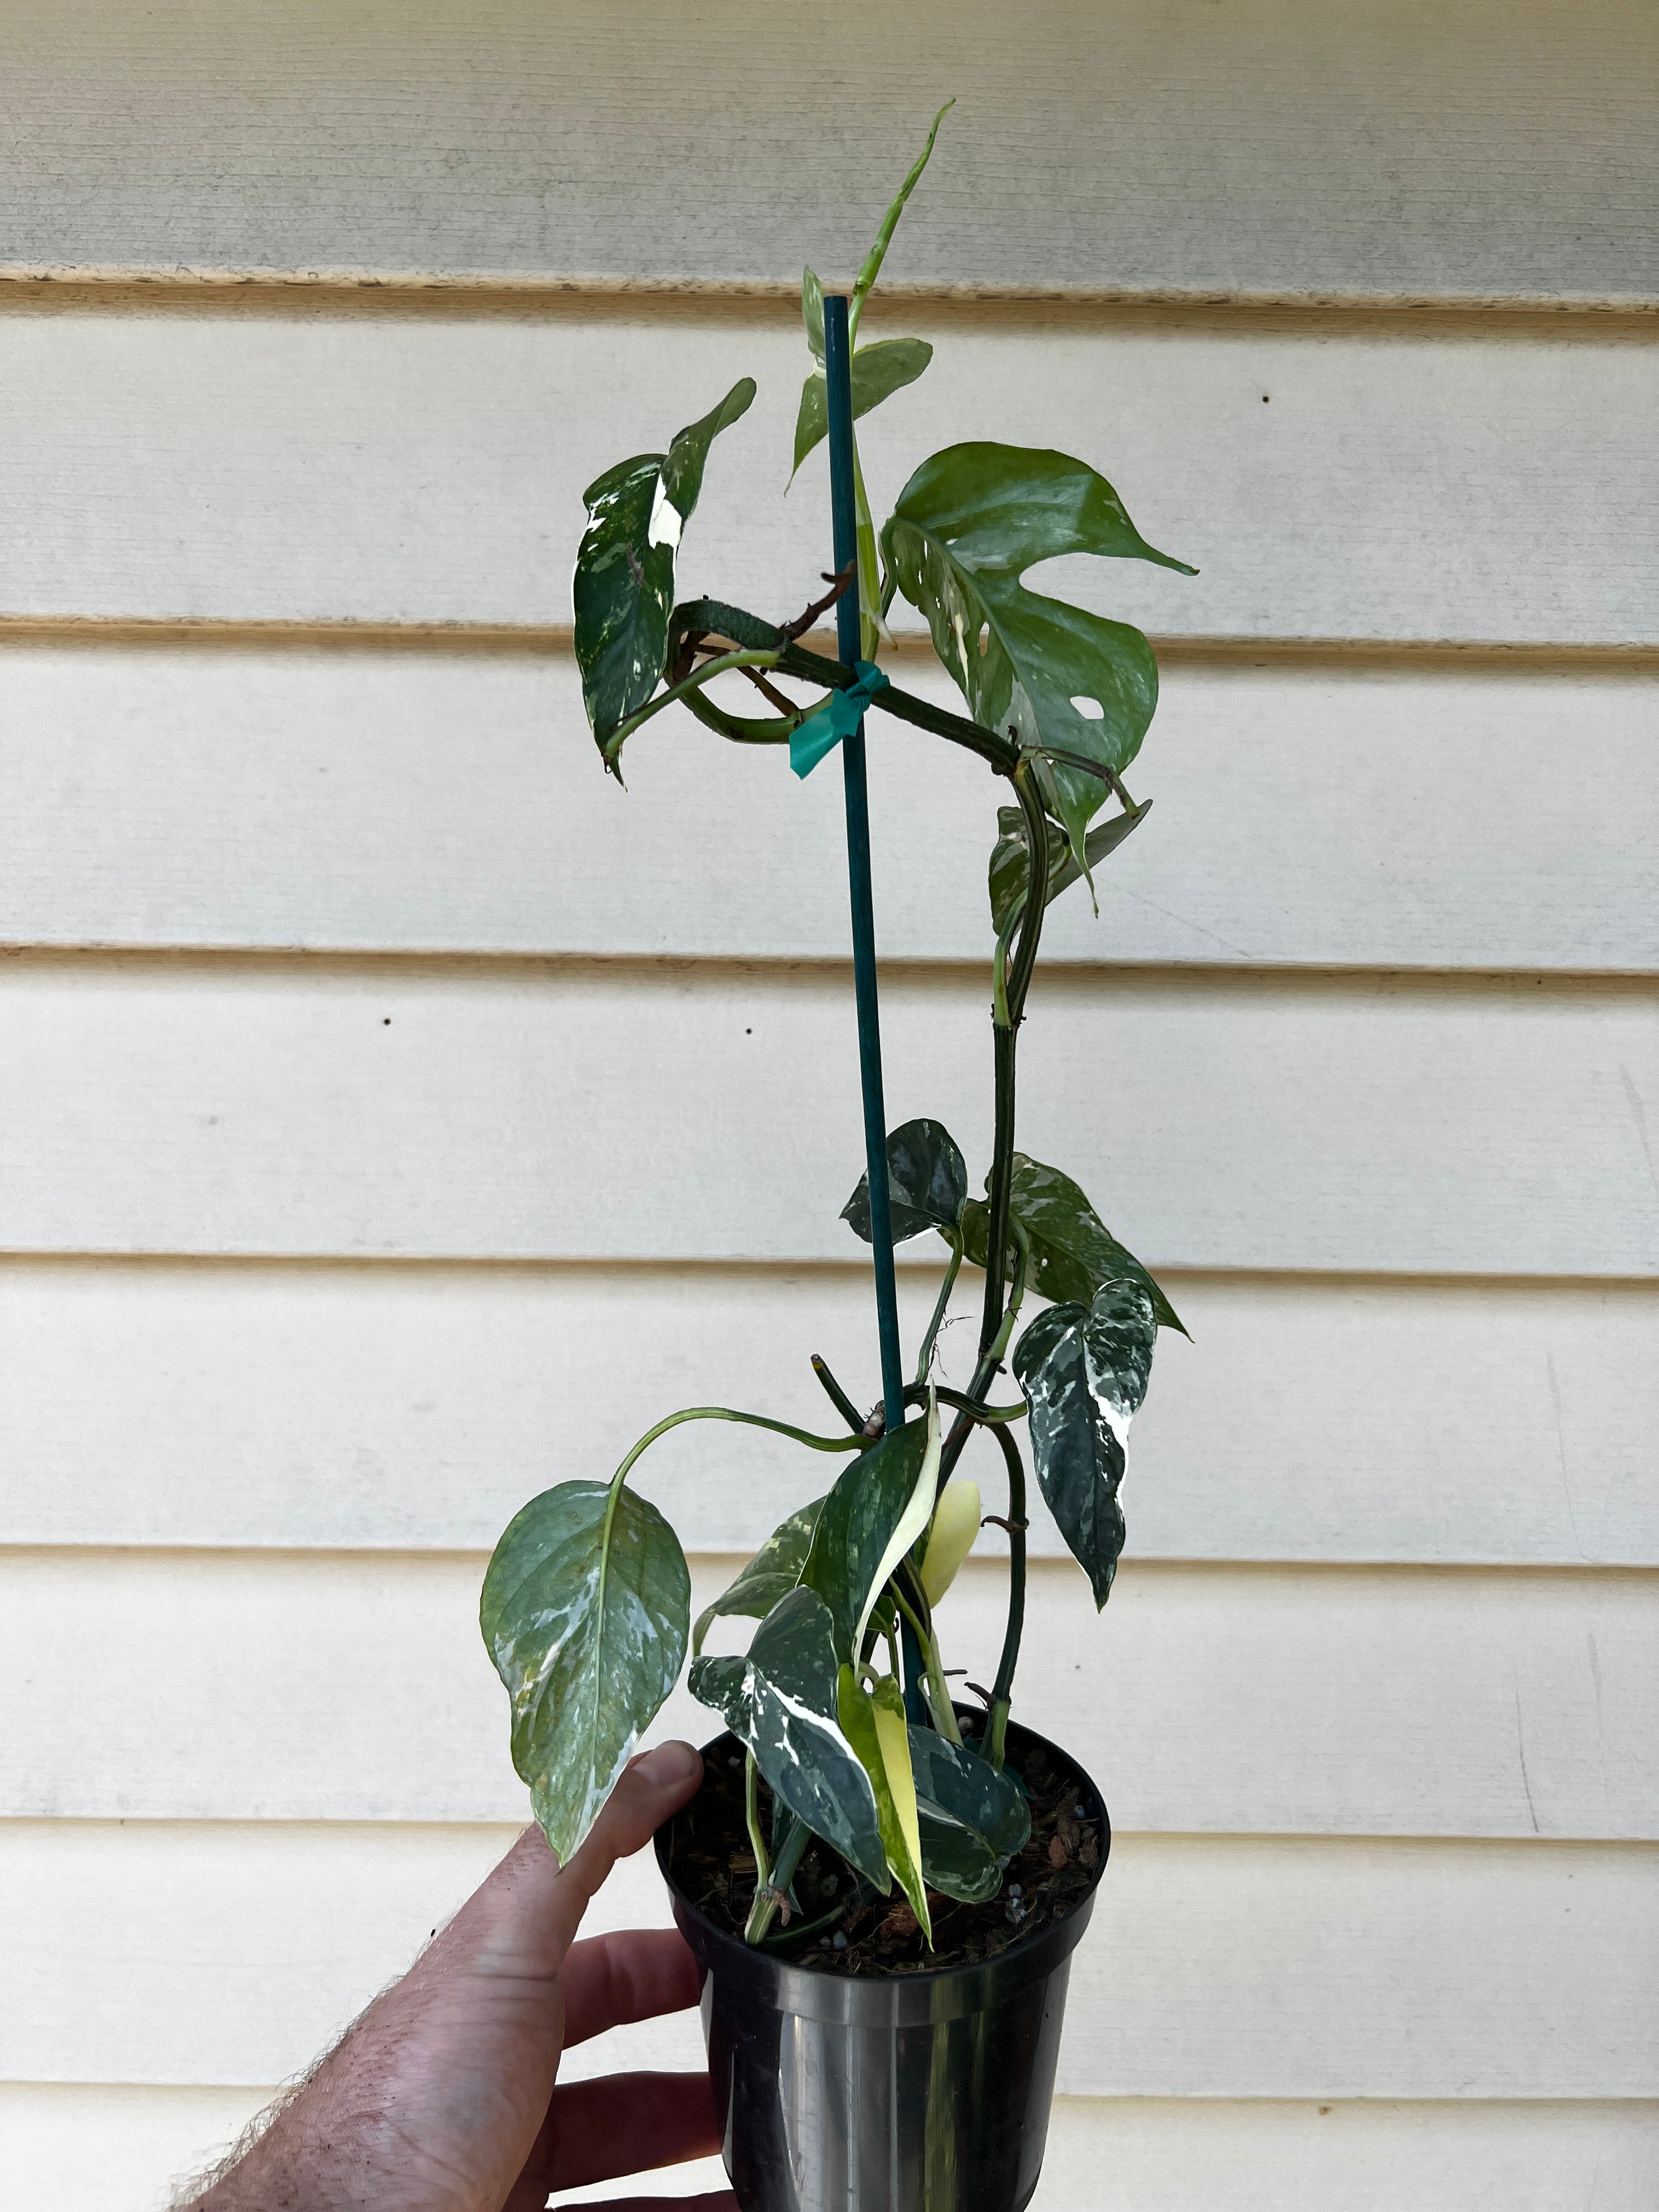 Epipremnum pinnatum 'Variegata' - RARE but easy houseplant/t